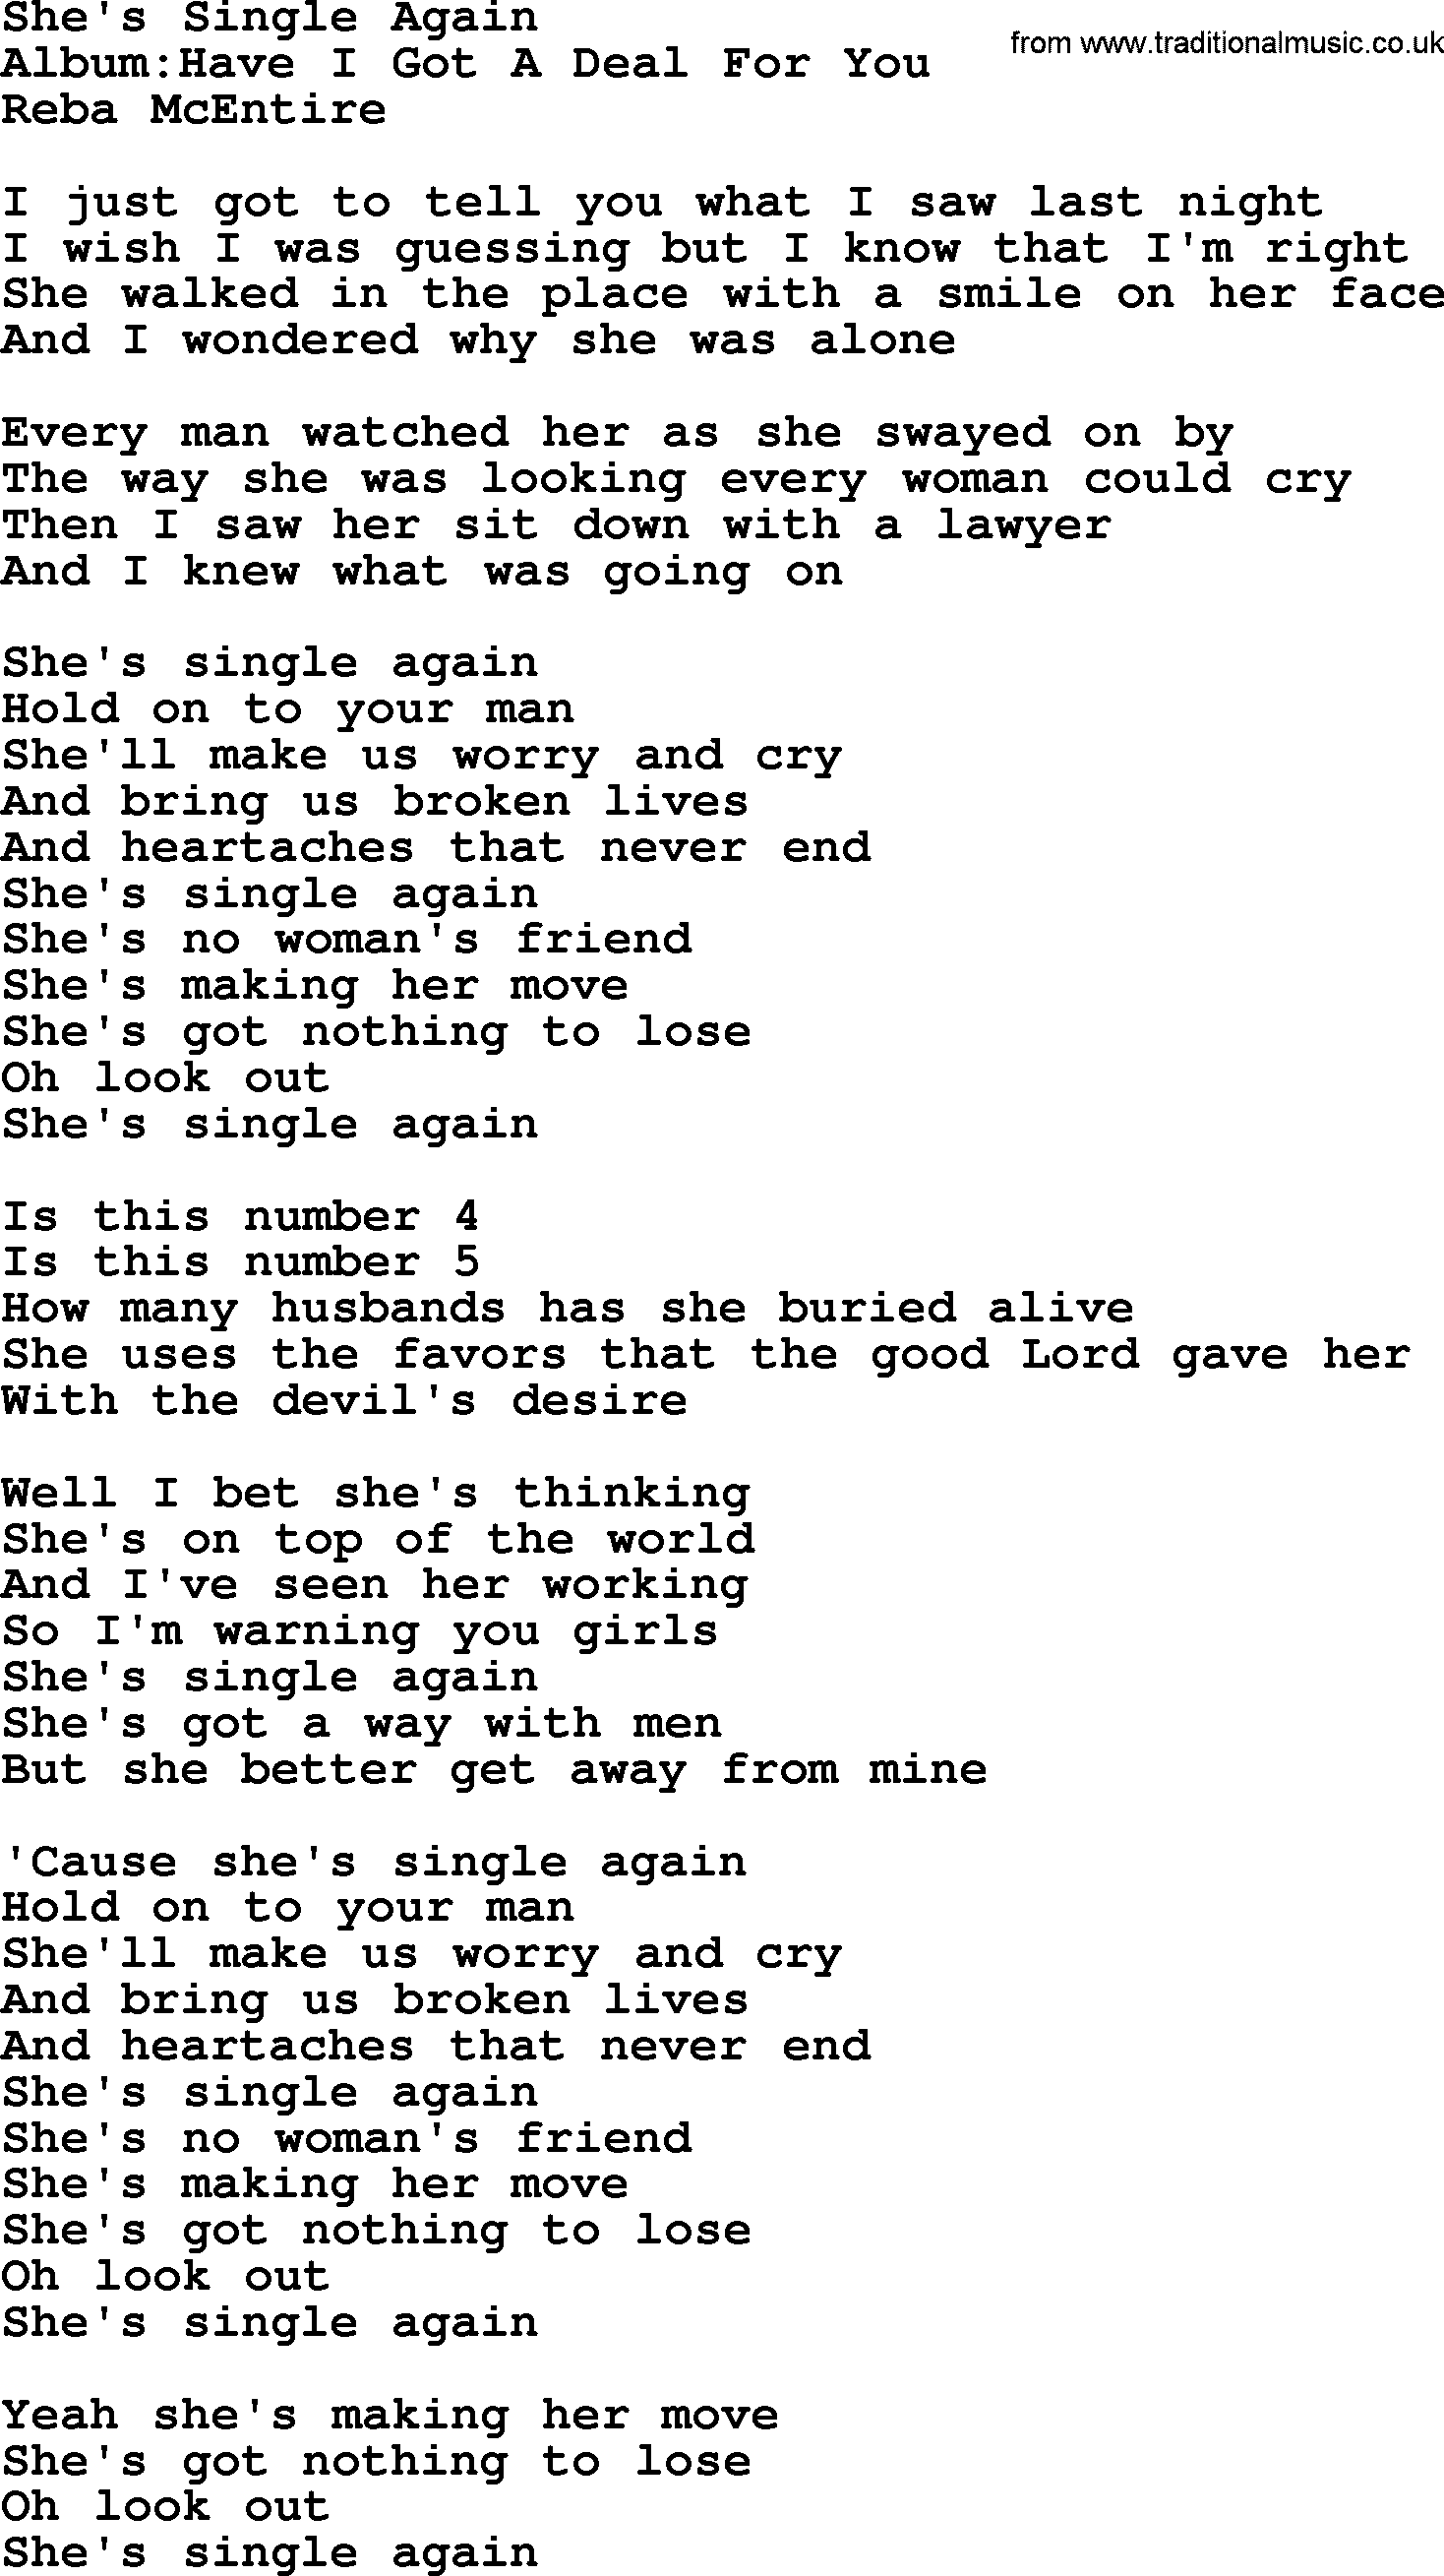 Reba McEntire song: She's Single Again lyrics